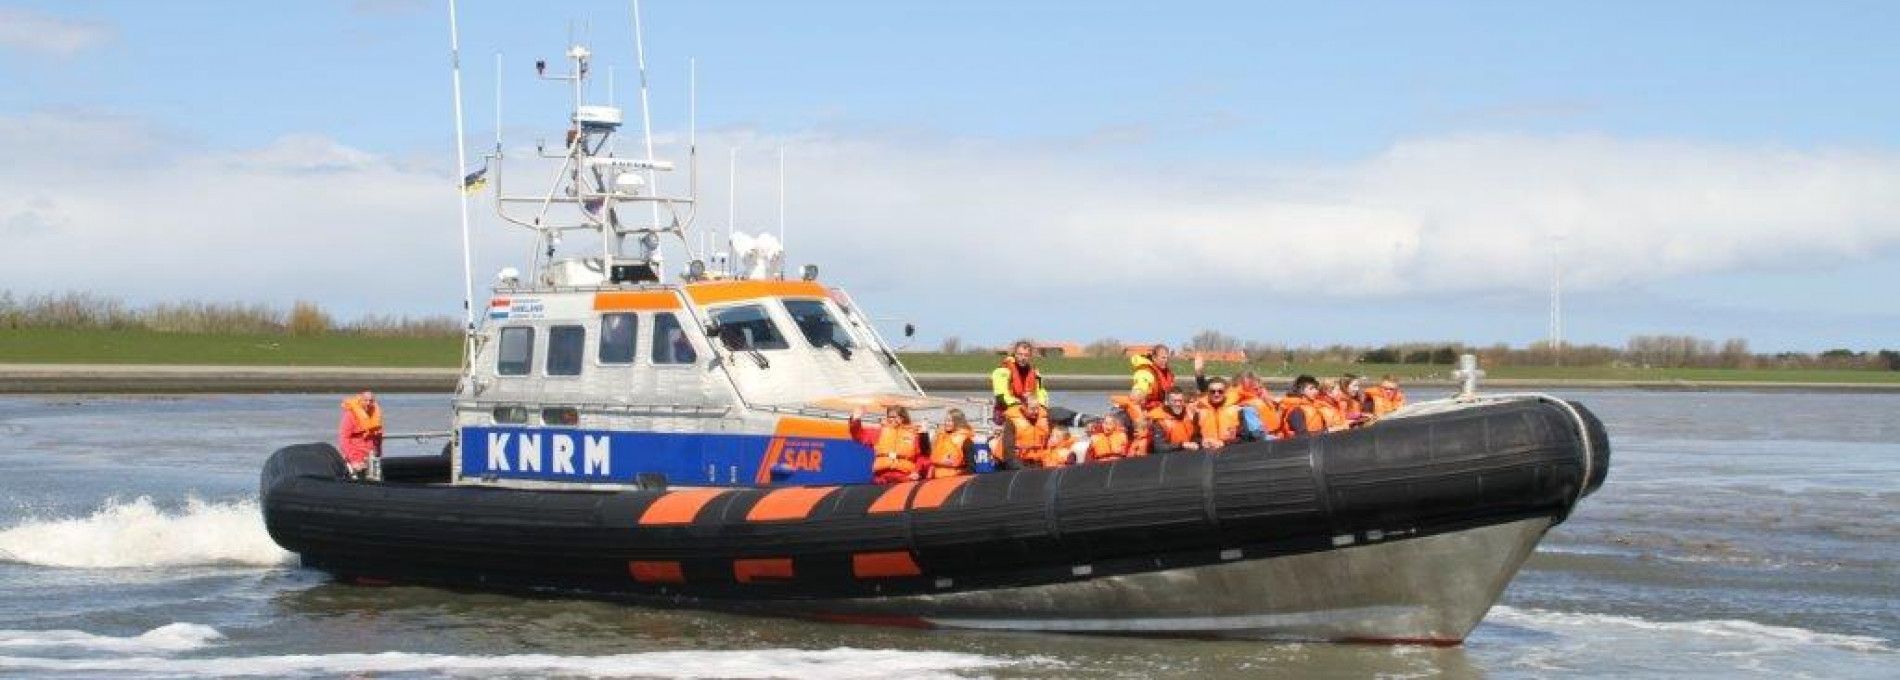 Nationaler Rettungsbootstag in Ballum - VVV Ameland